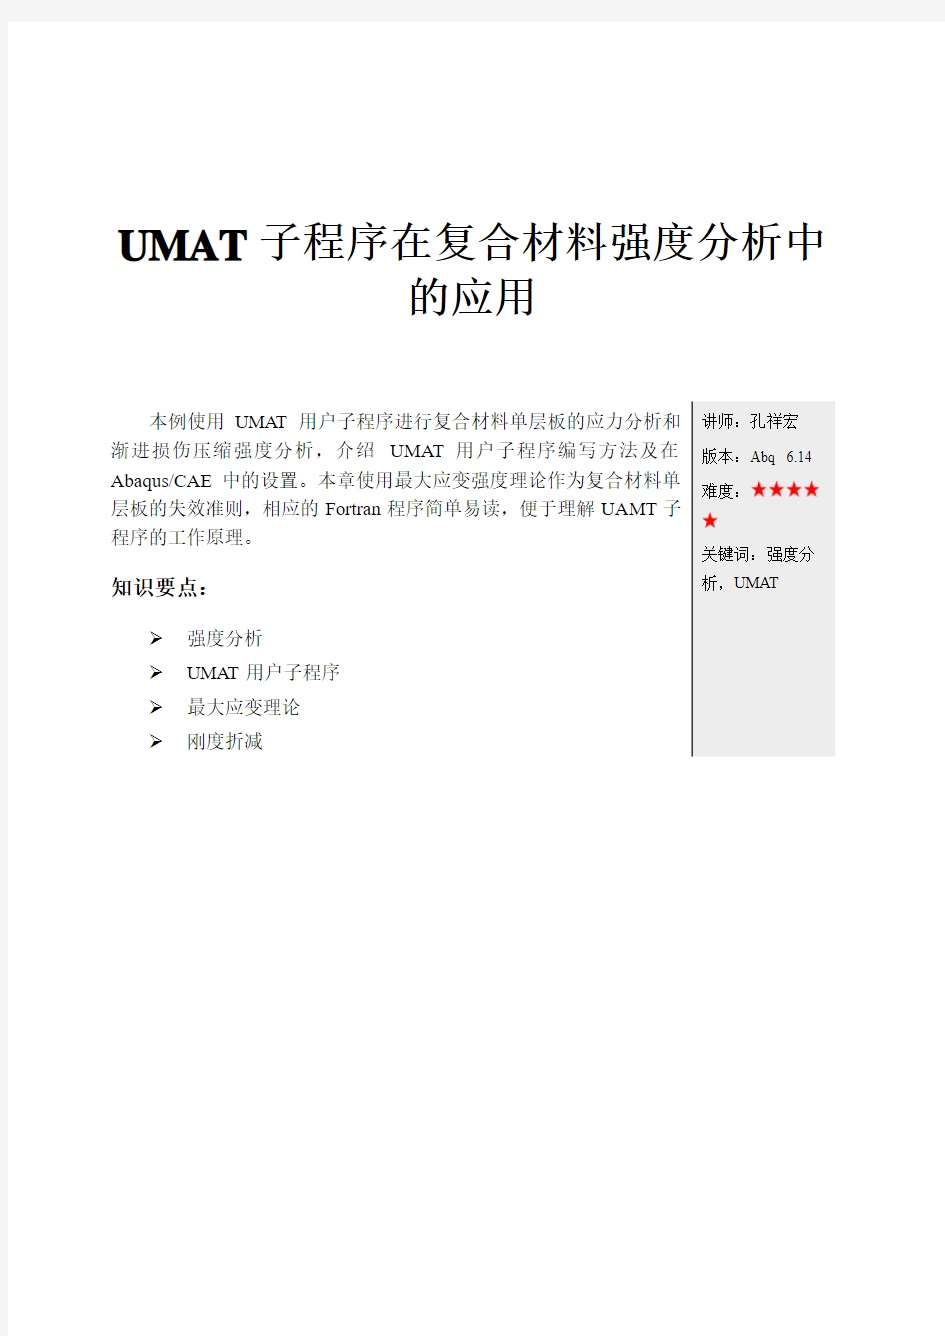 UMAT子程序在复合材料强度分析中的应用